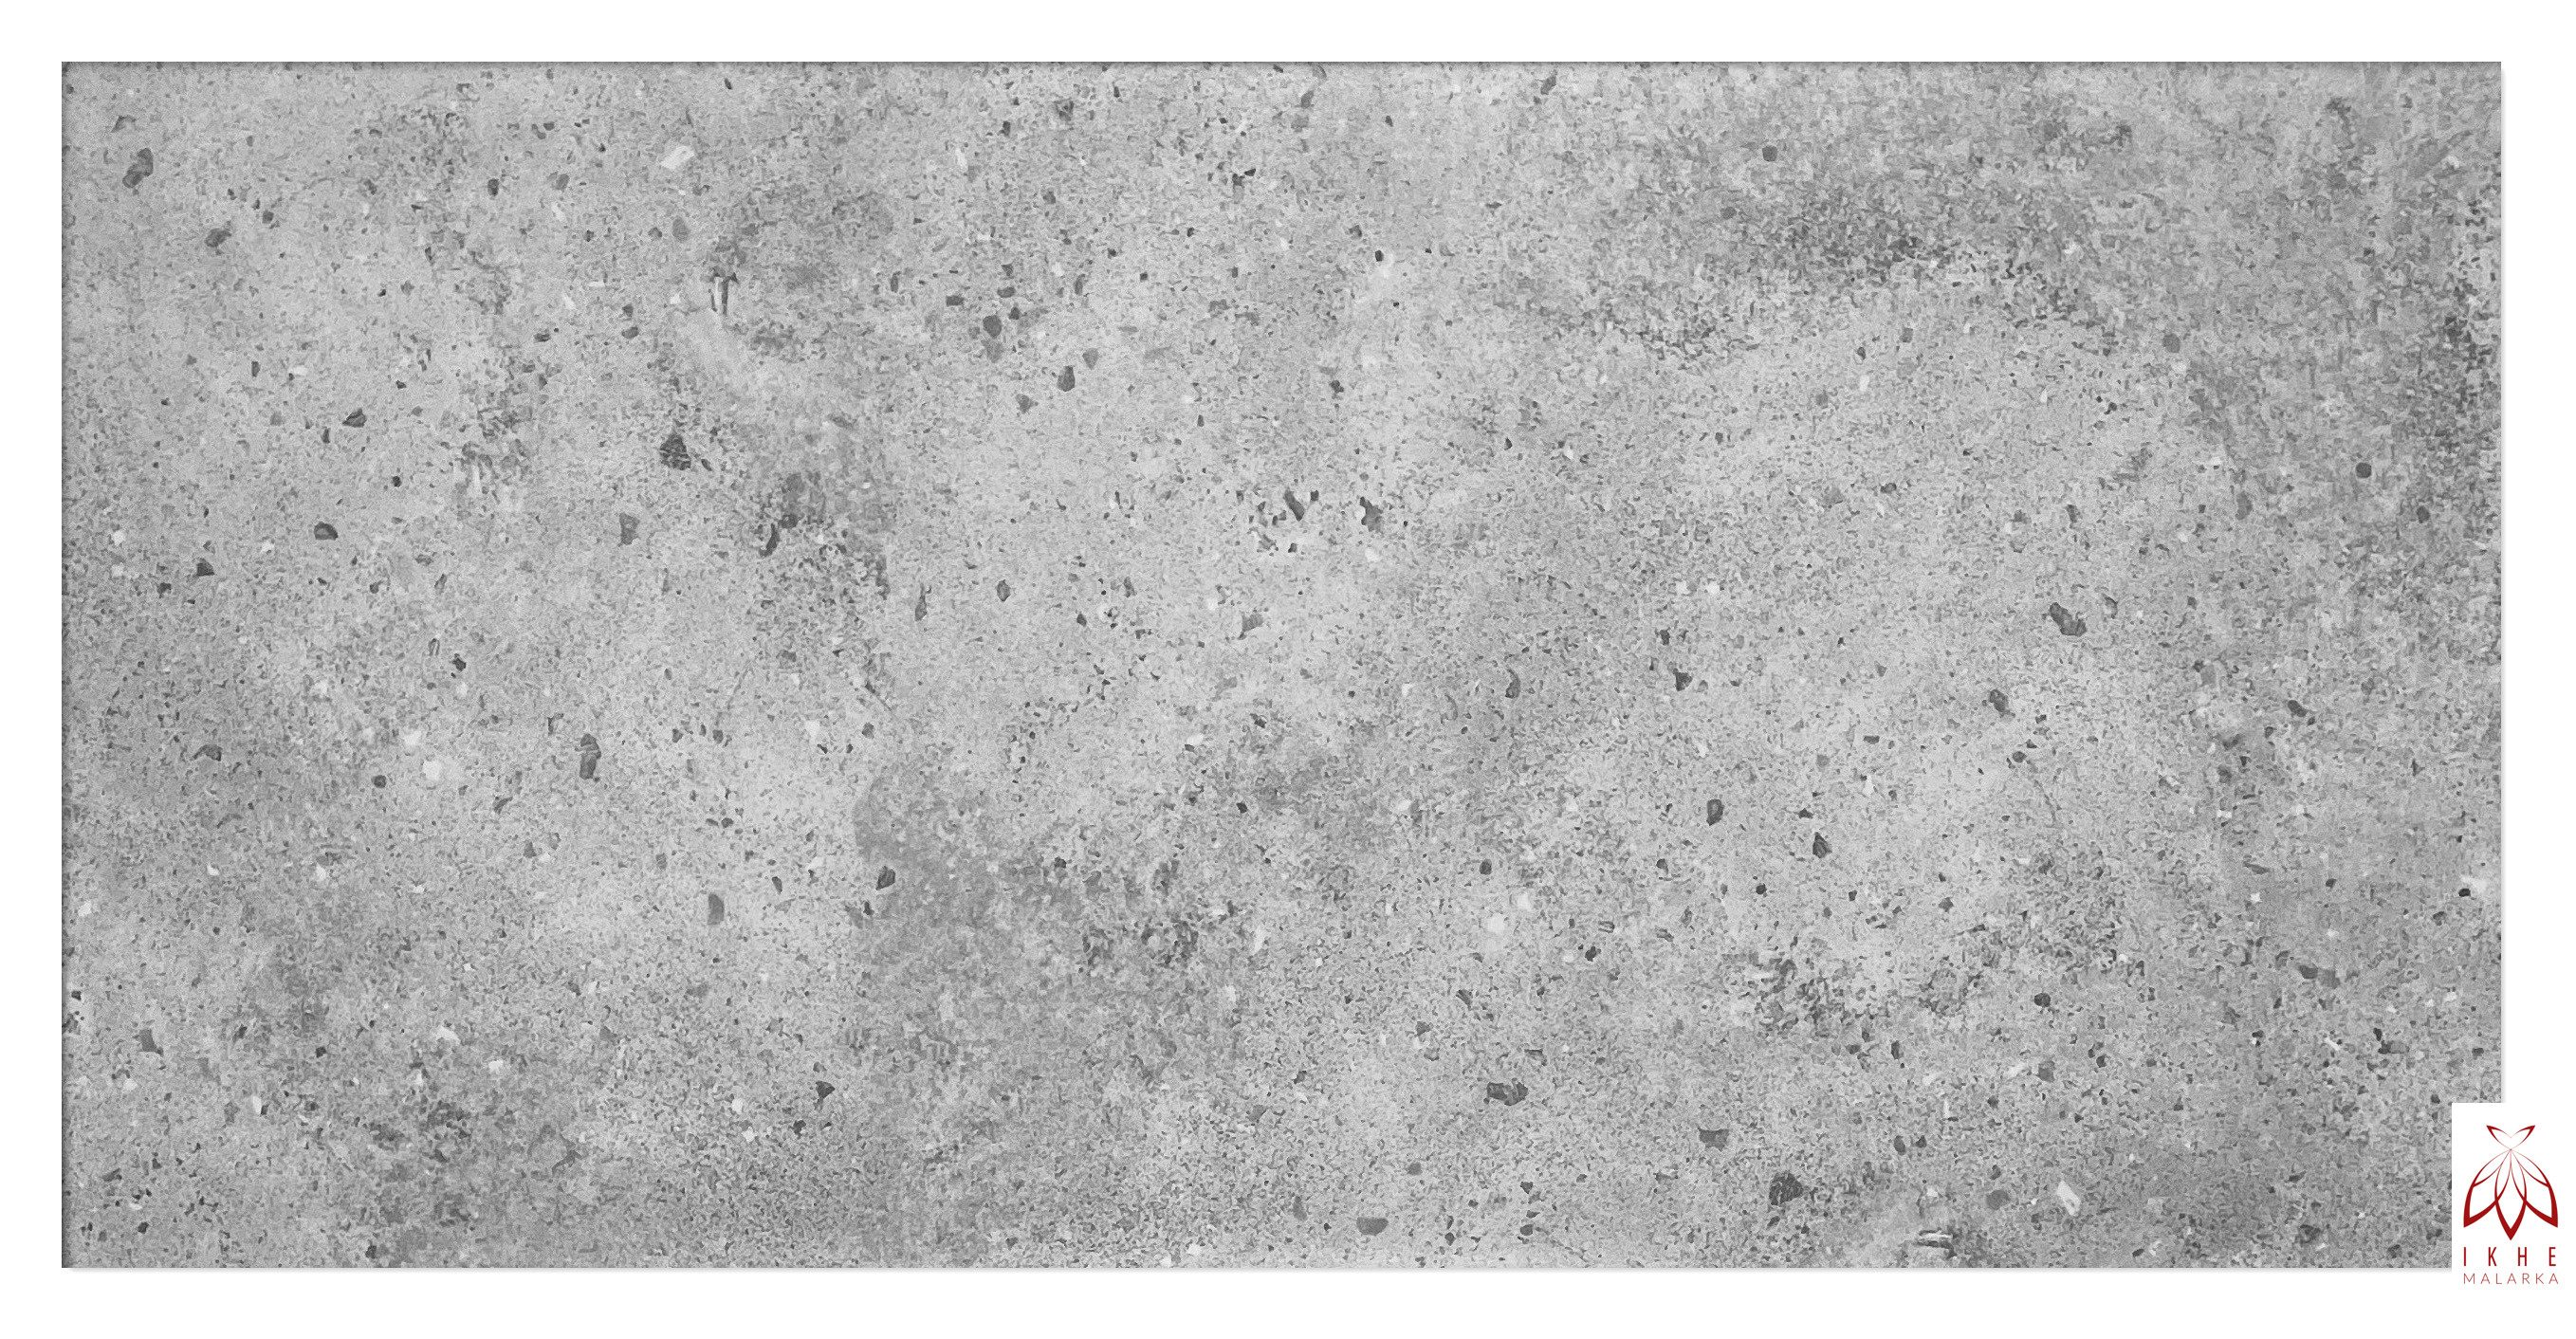 IKHEMalarka 3D Wandpaneel Betonoptik Marmor aus Polystyrol Styropor XPS, BxL: 50,00x100,00 cm, 0,50 qm, (1 Stück, 0,5m) Deckenpaneelen - 3mm dick - 100x50cm